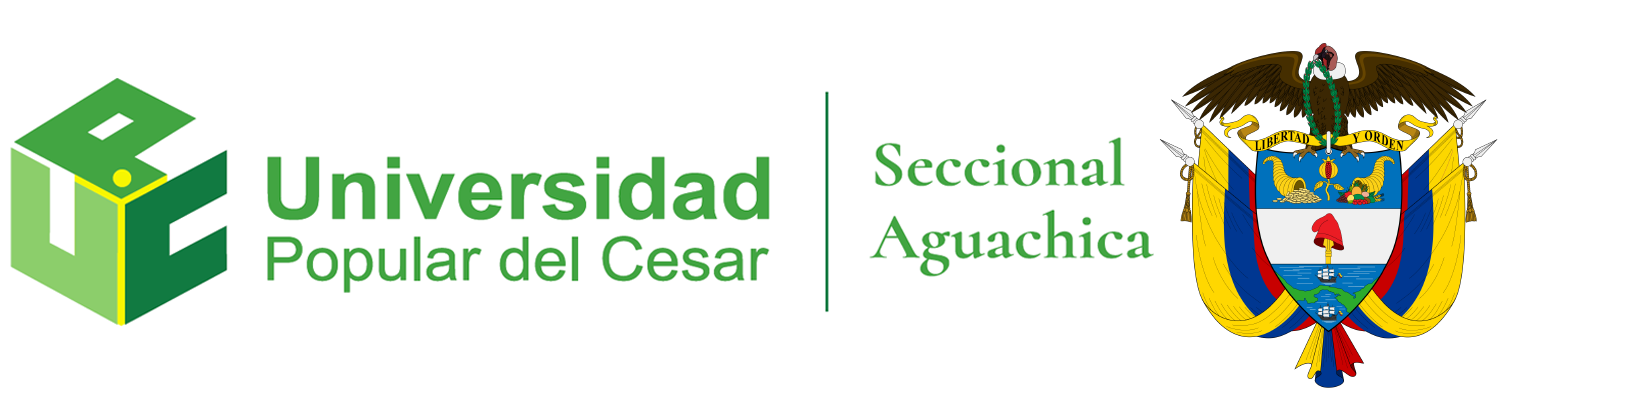 UNIVERSIDAD POPULAR DEL CESAR SECCIONAL AGUACHICA